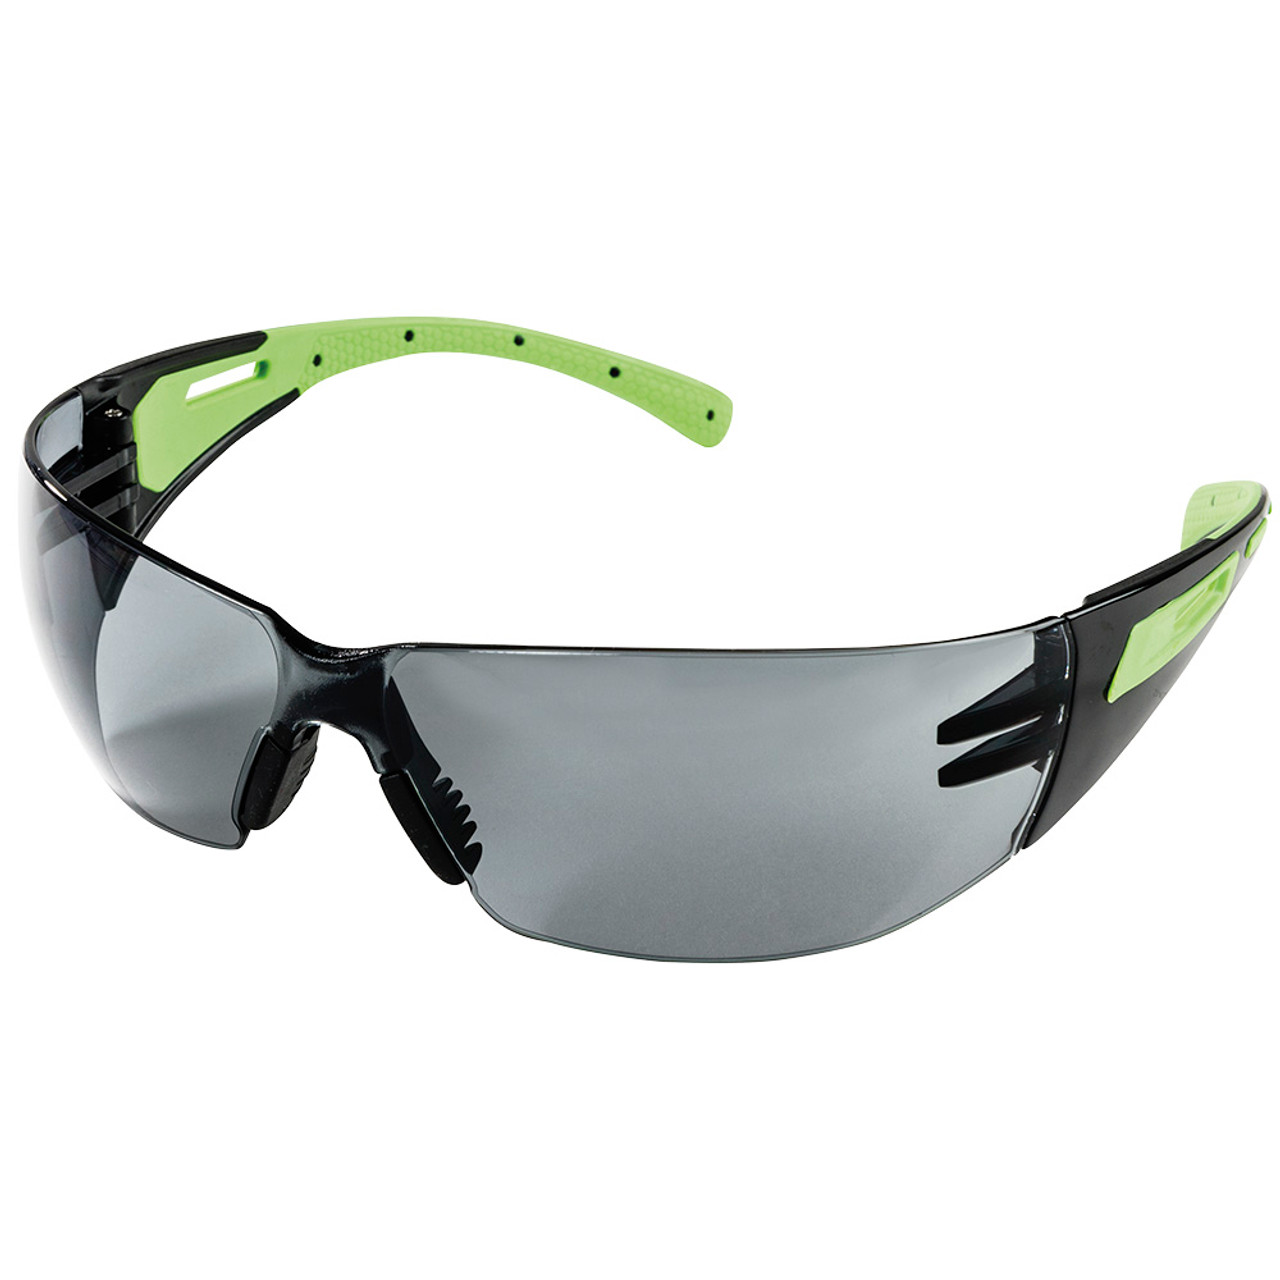 Sellstrom® XM300 Series Hard Coated Wrap Around Safety Glasses - Smoke Tint - Hi-Viz Green-Black Arms  S71101